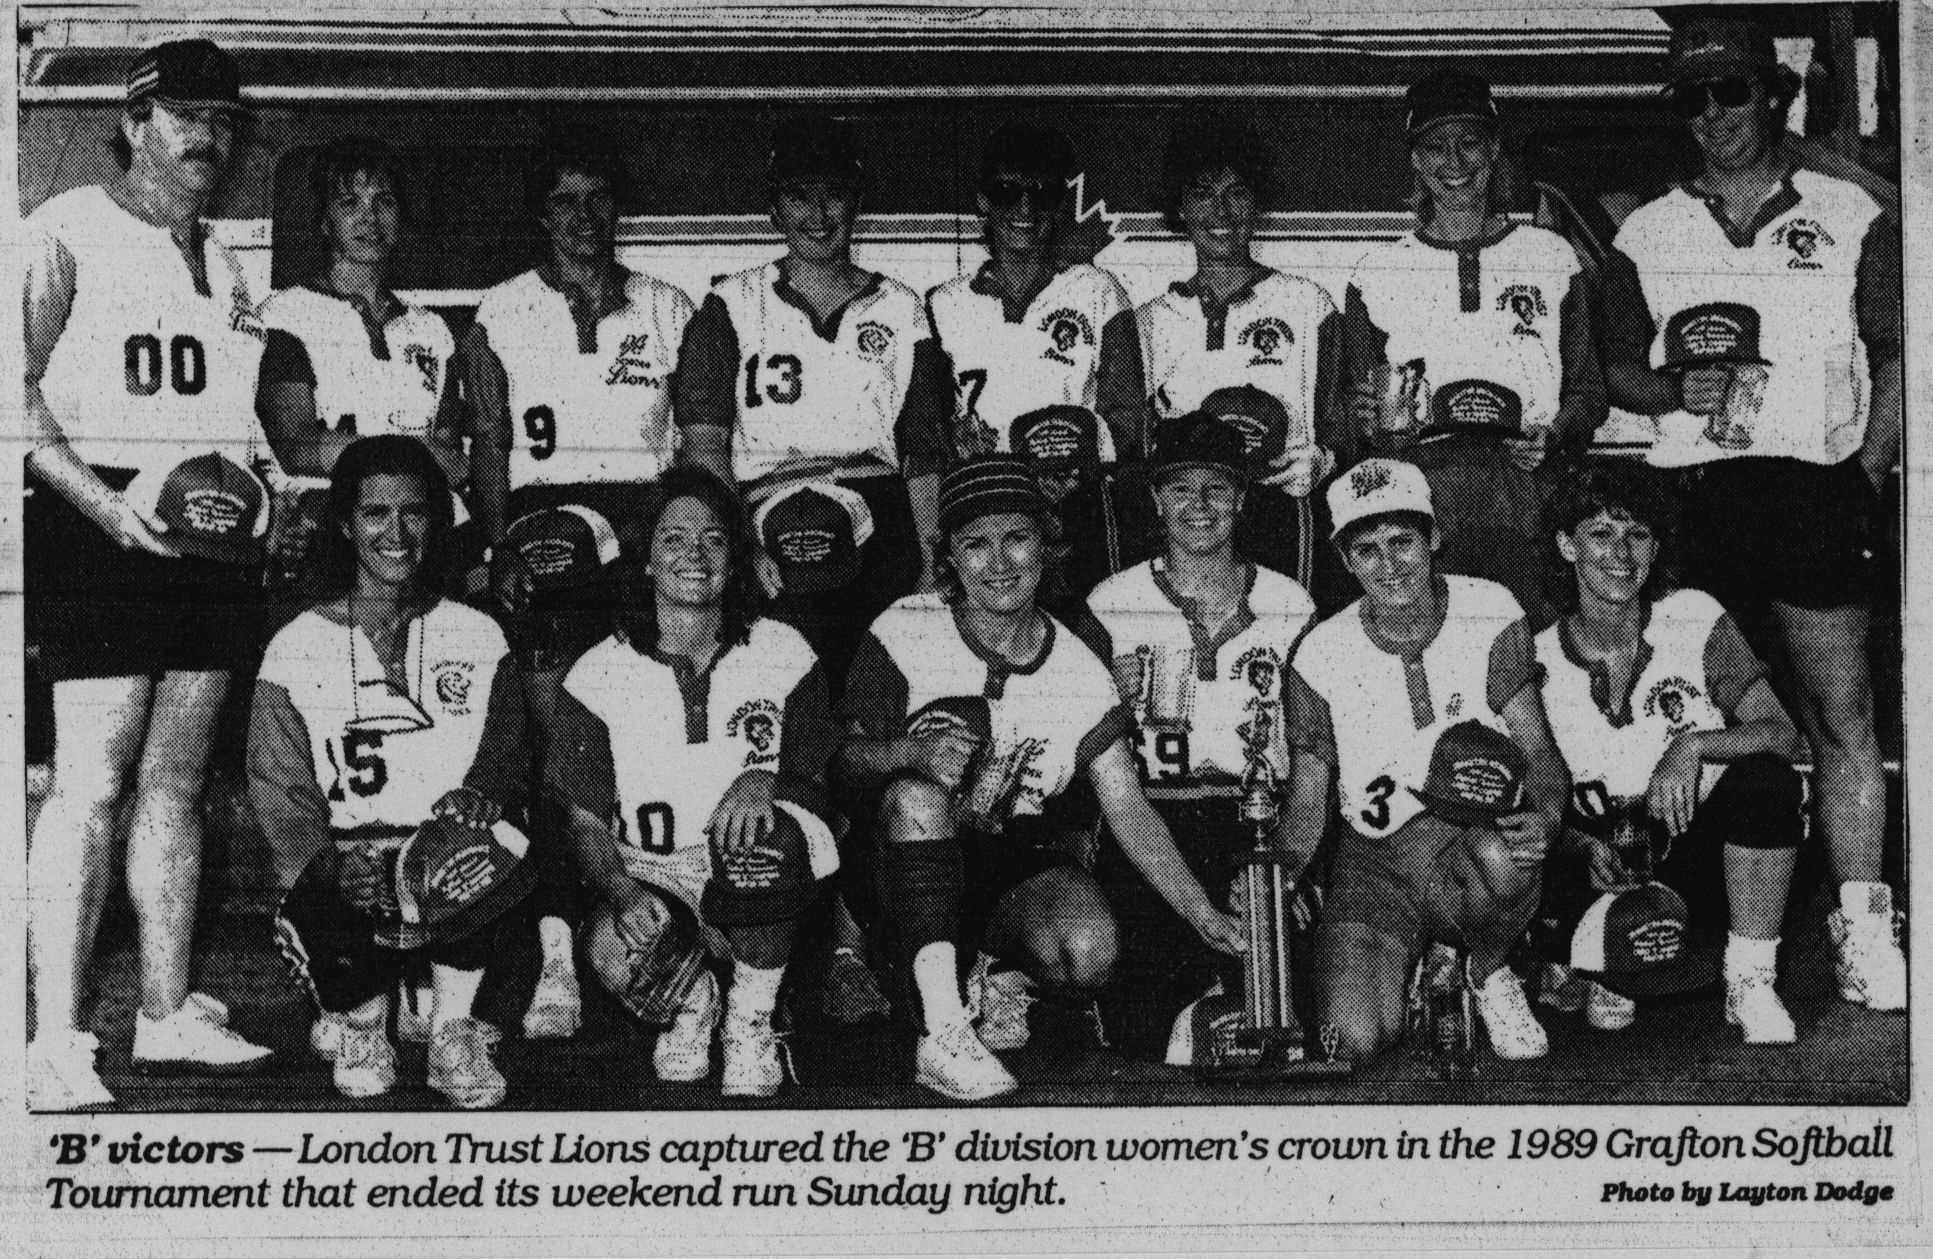 Softball -Grafton Tournament -1989 -Ladies-B Champs-London Trust Lions